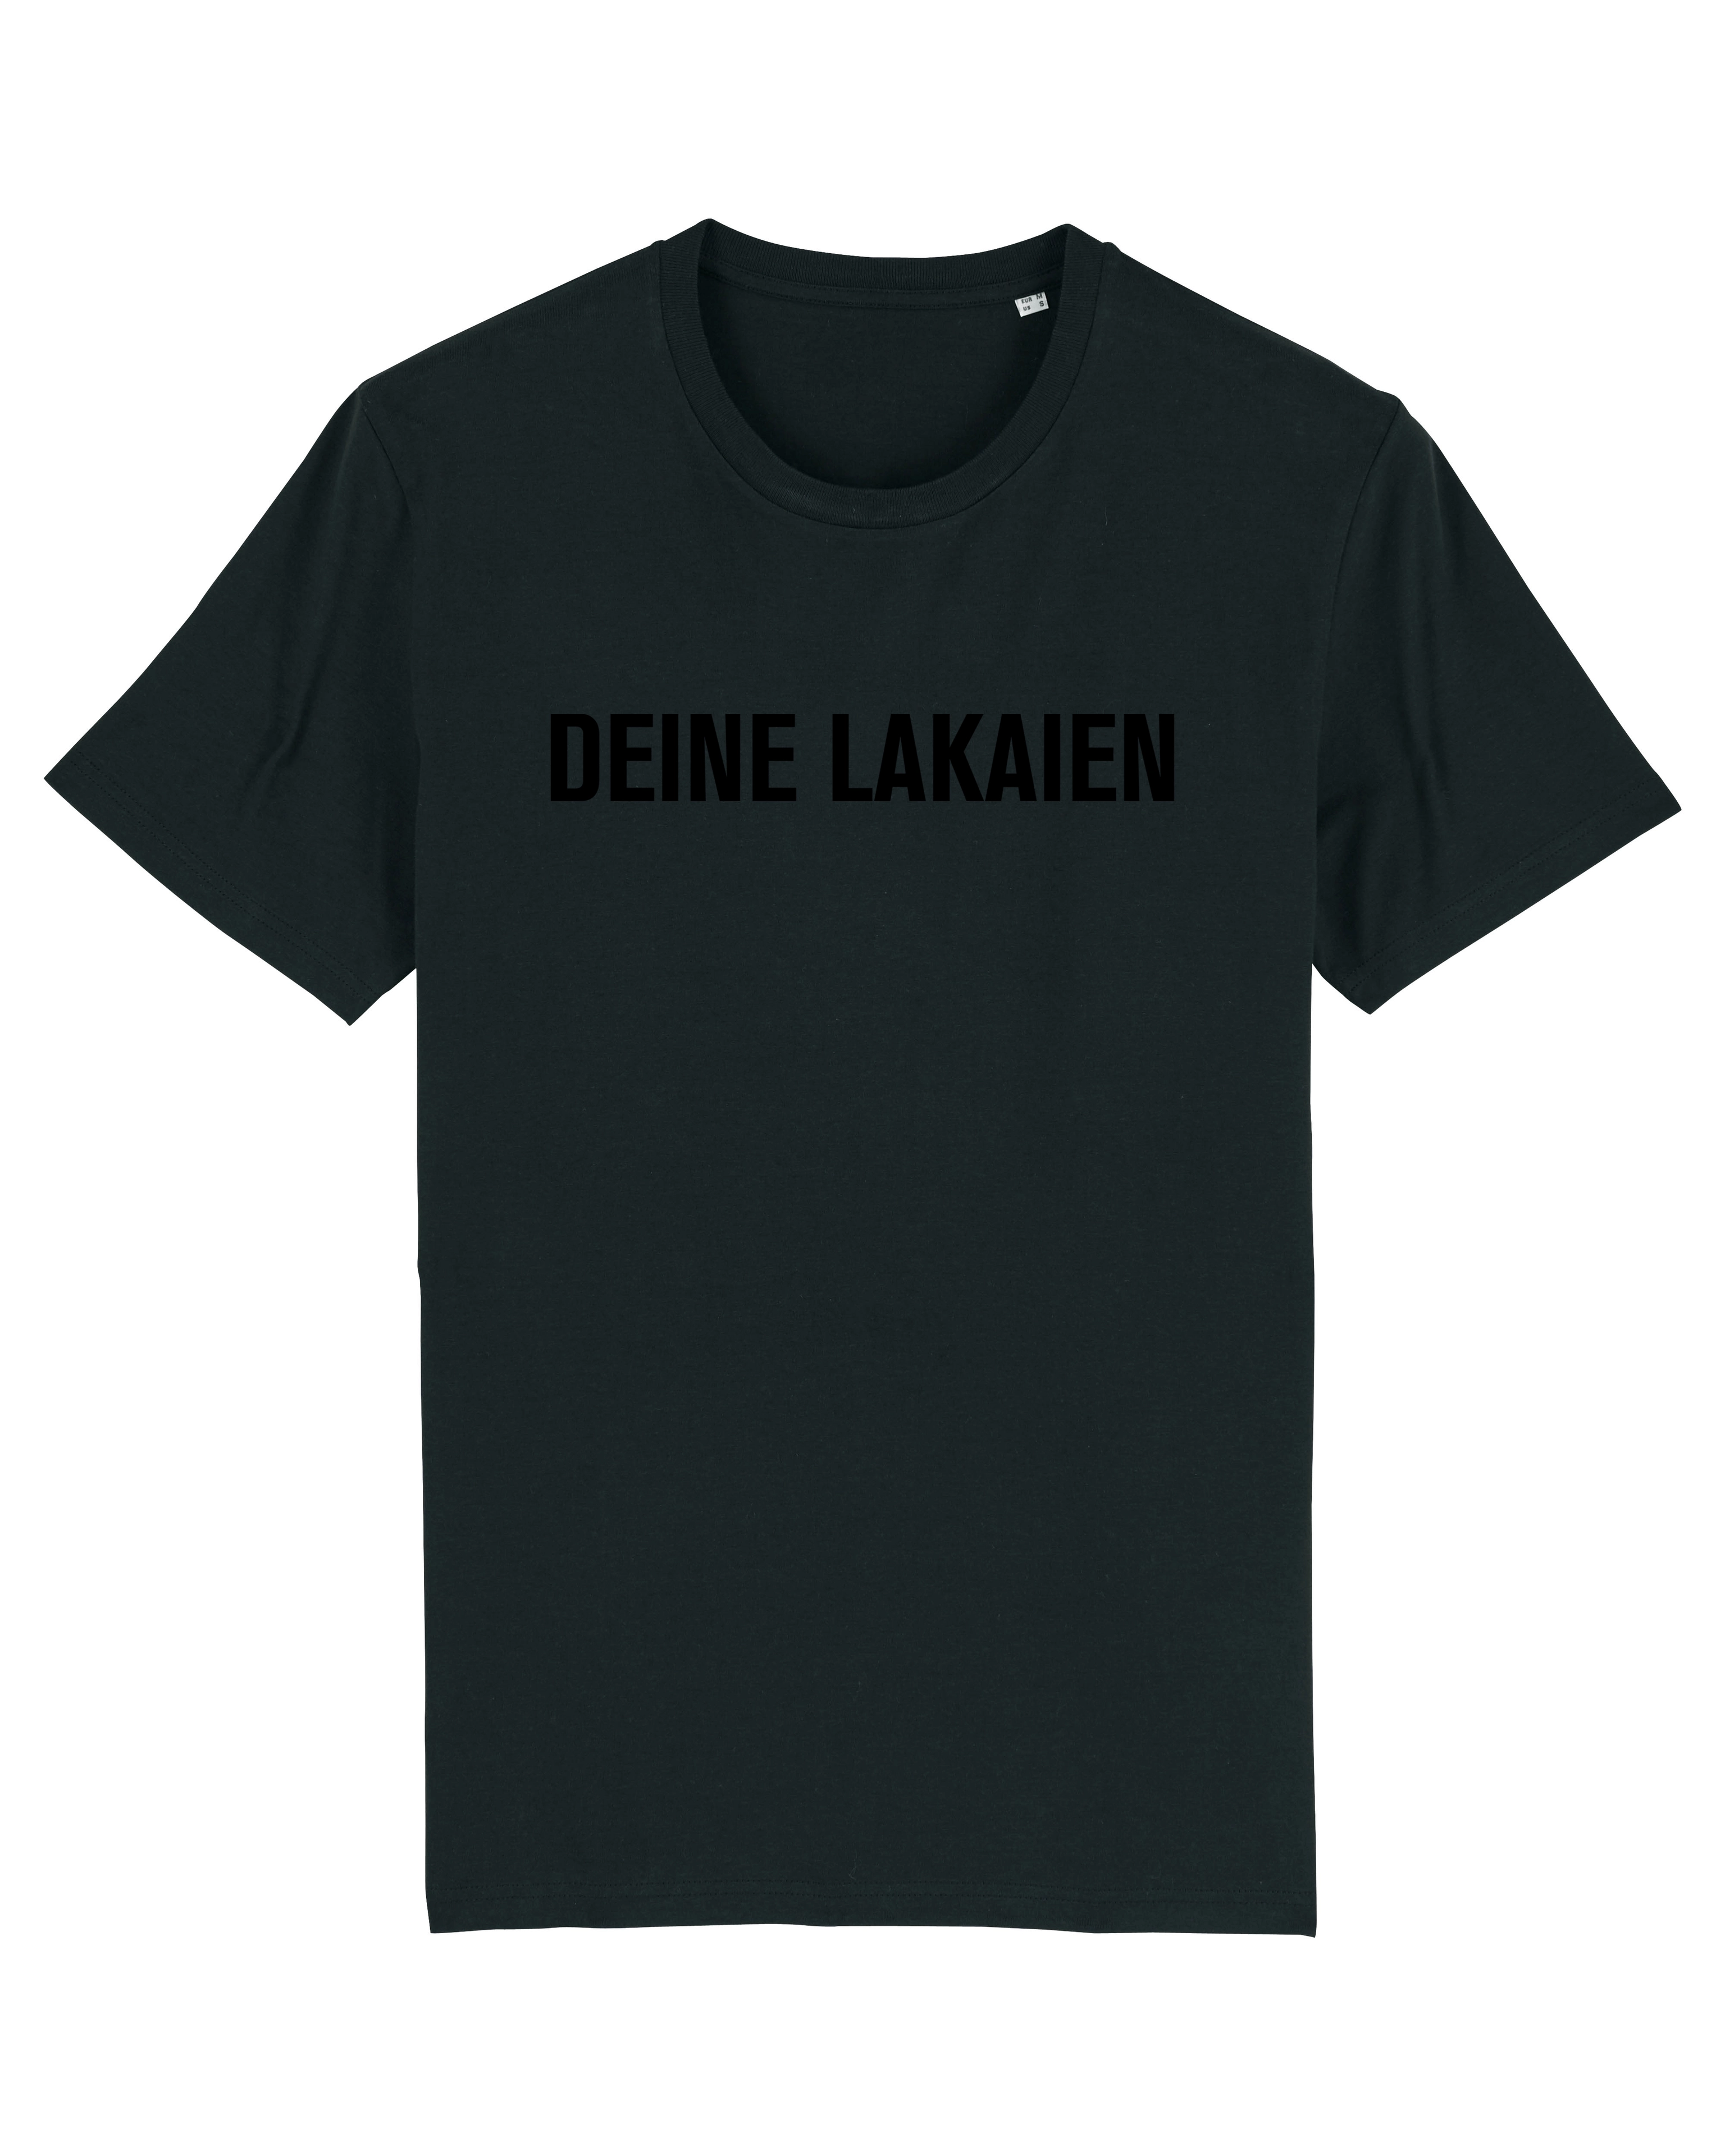 DEINE LAKAIEN - All Black [T-SHIRT]